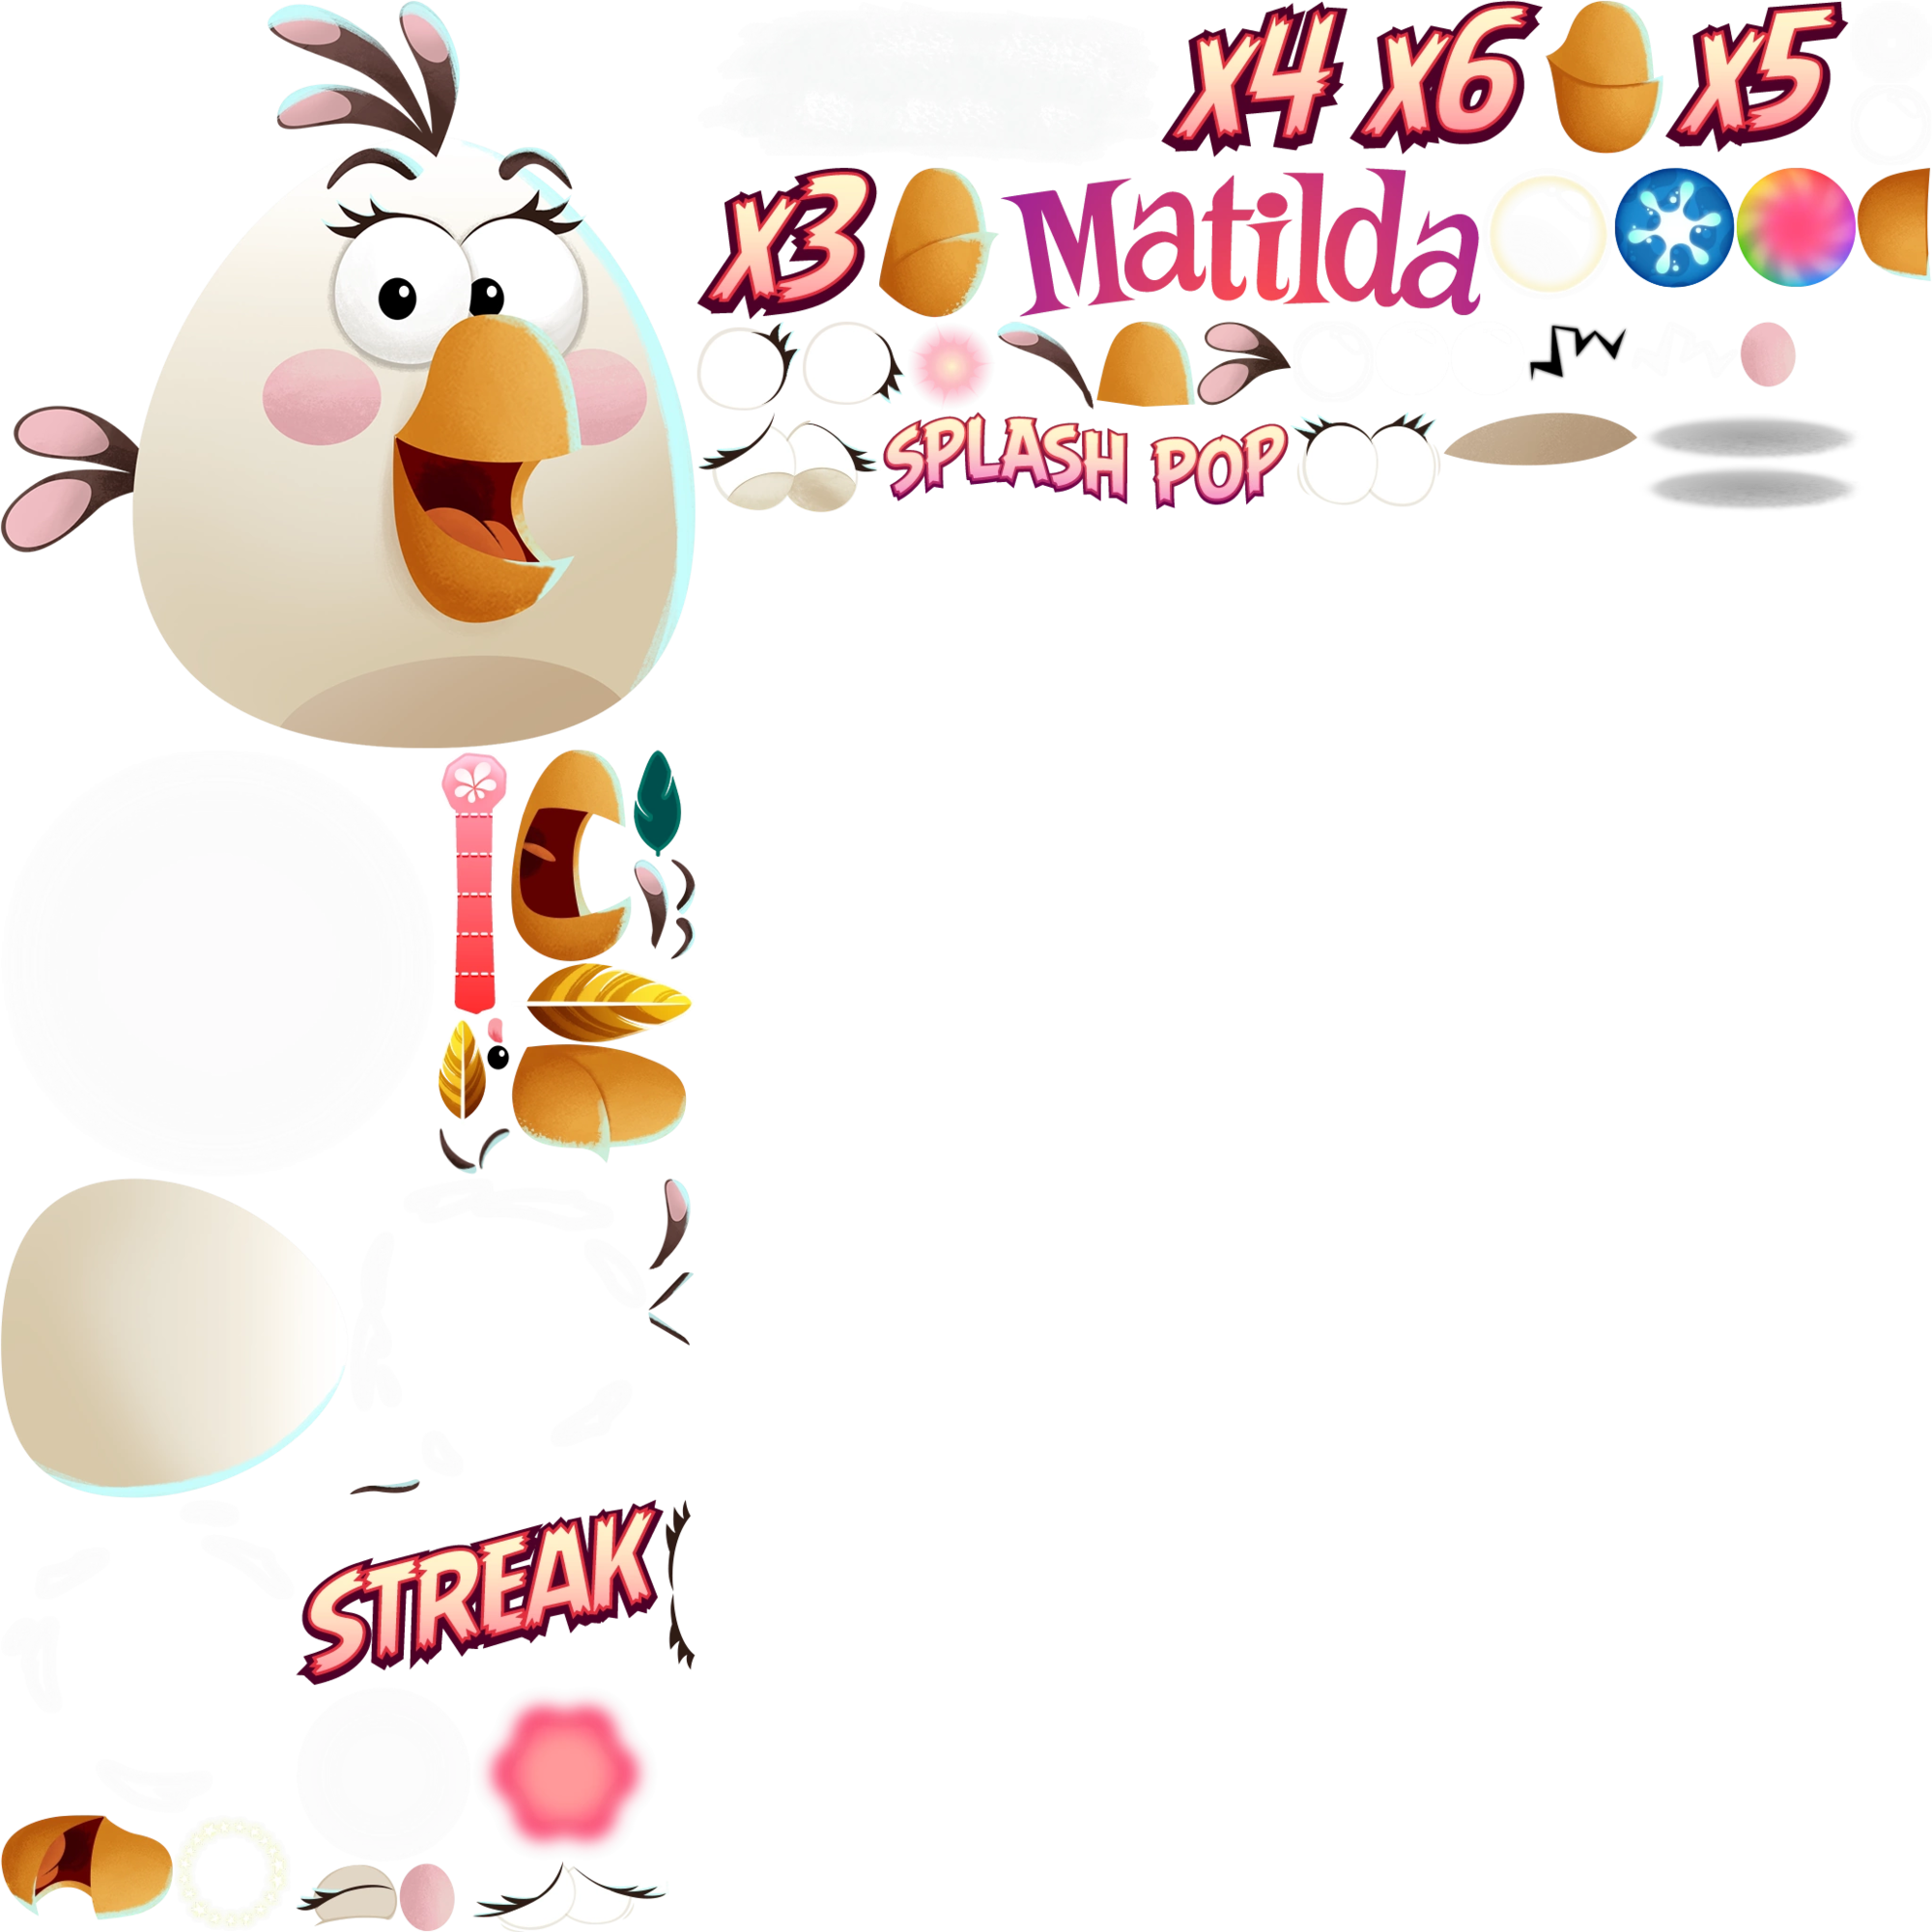 Abpop Wp Sprites 6 - Matilda Splash Pop Angry Birds (2000x2000)